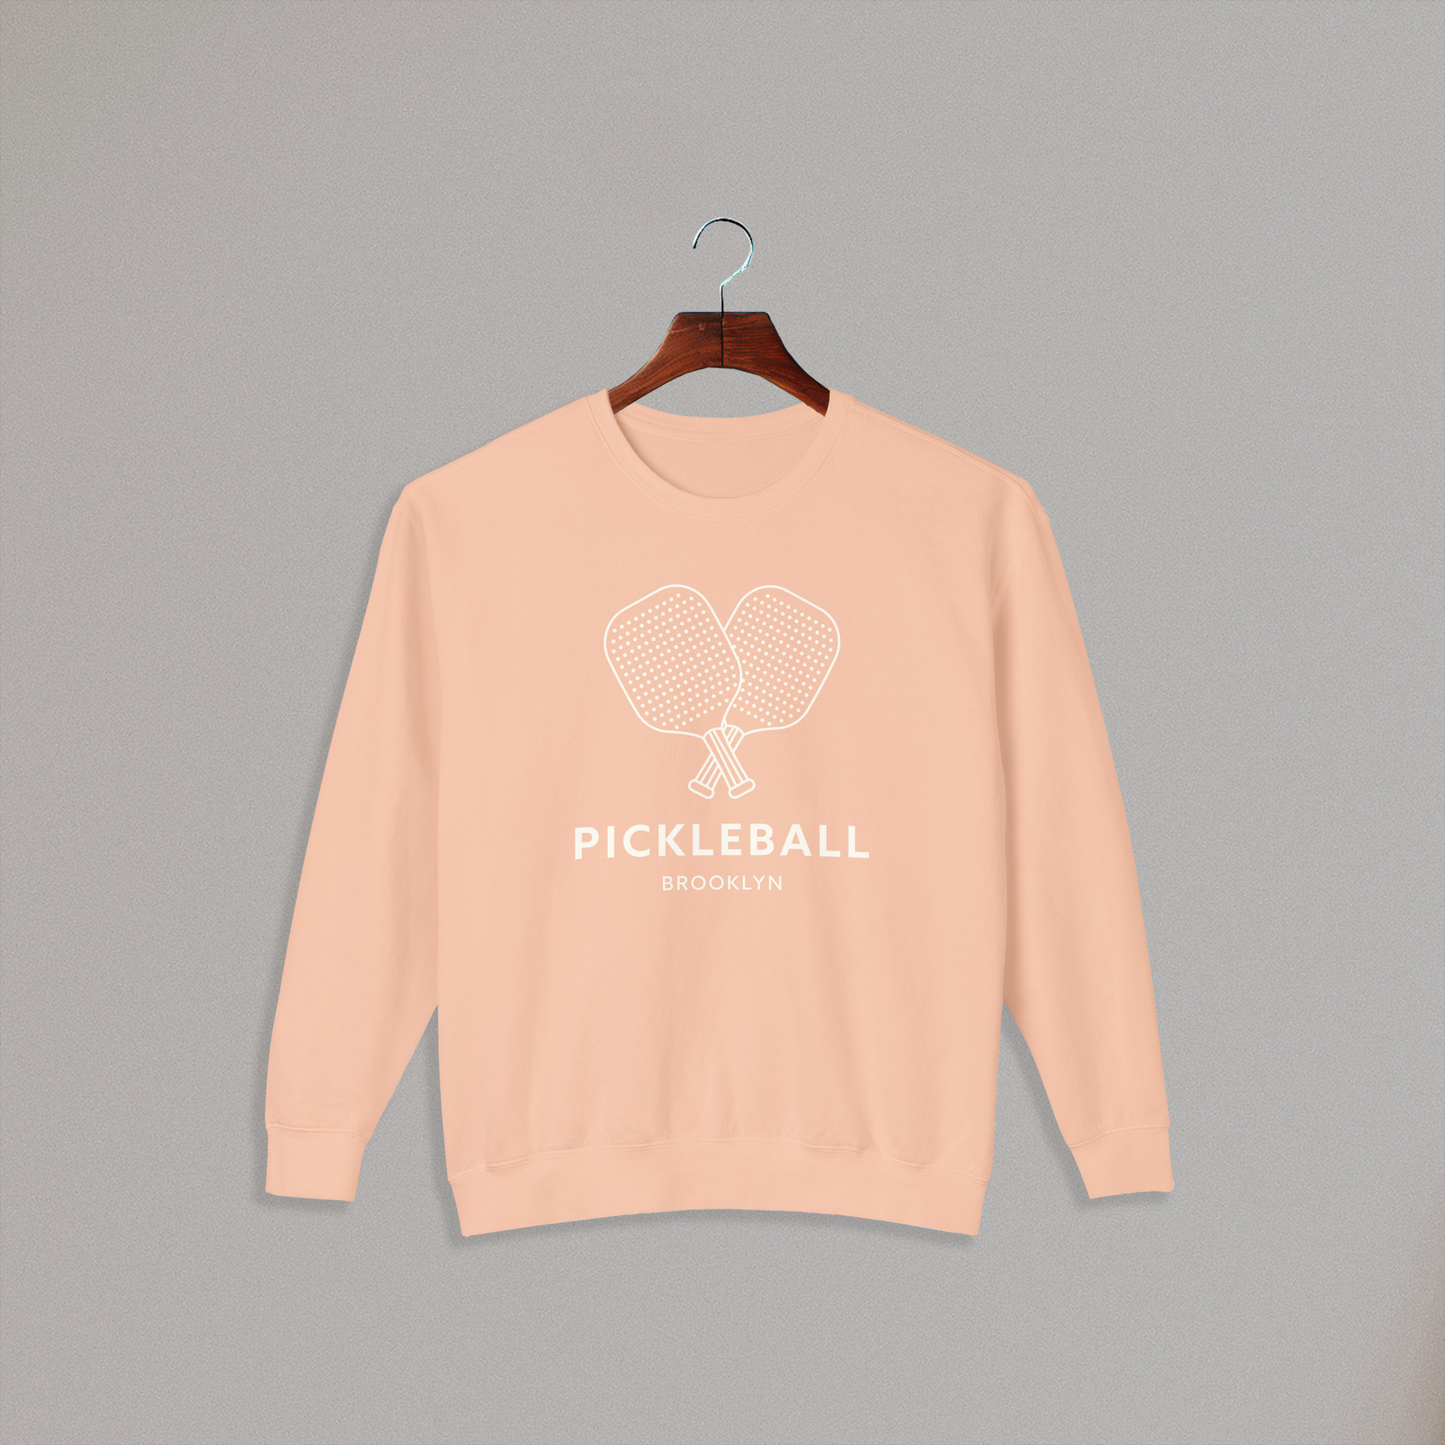 Brooklyn Pickleball Sweatshirt, 100% Cotton